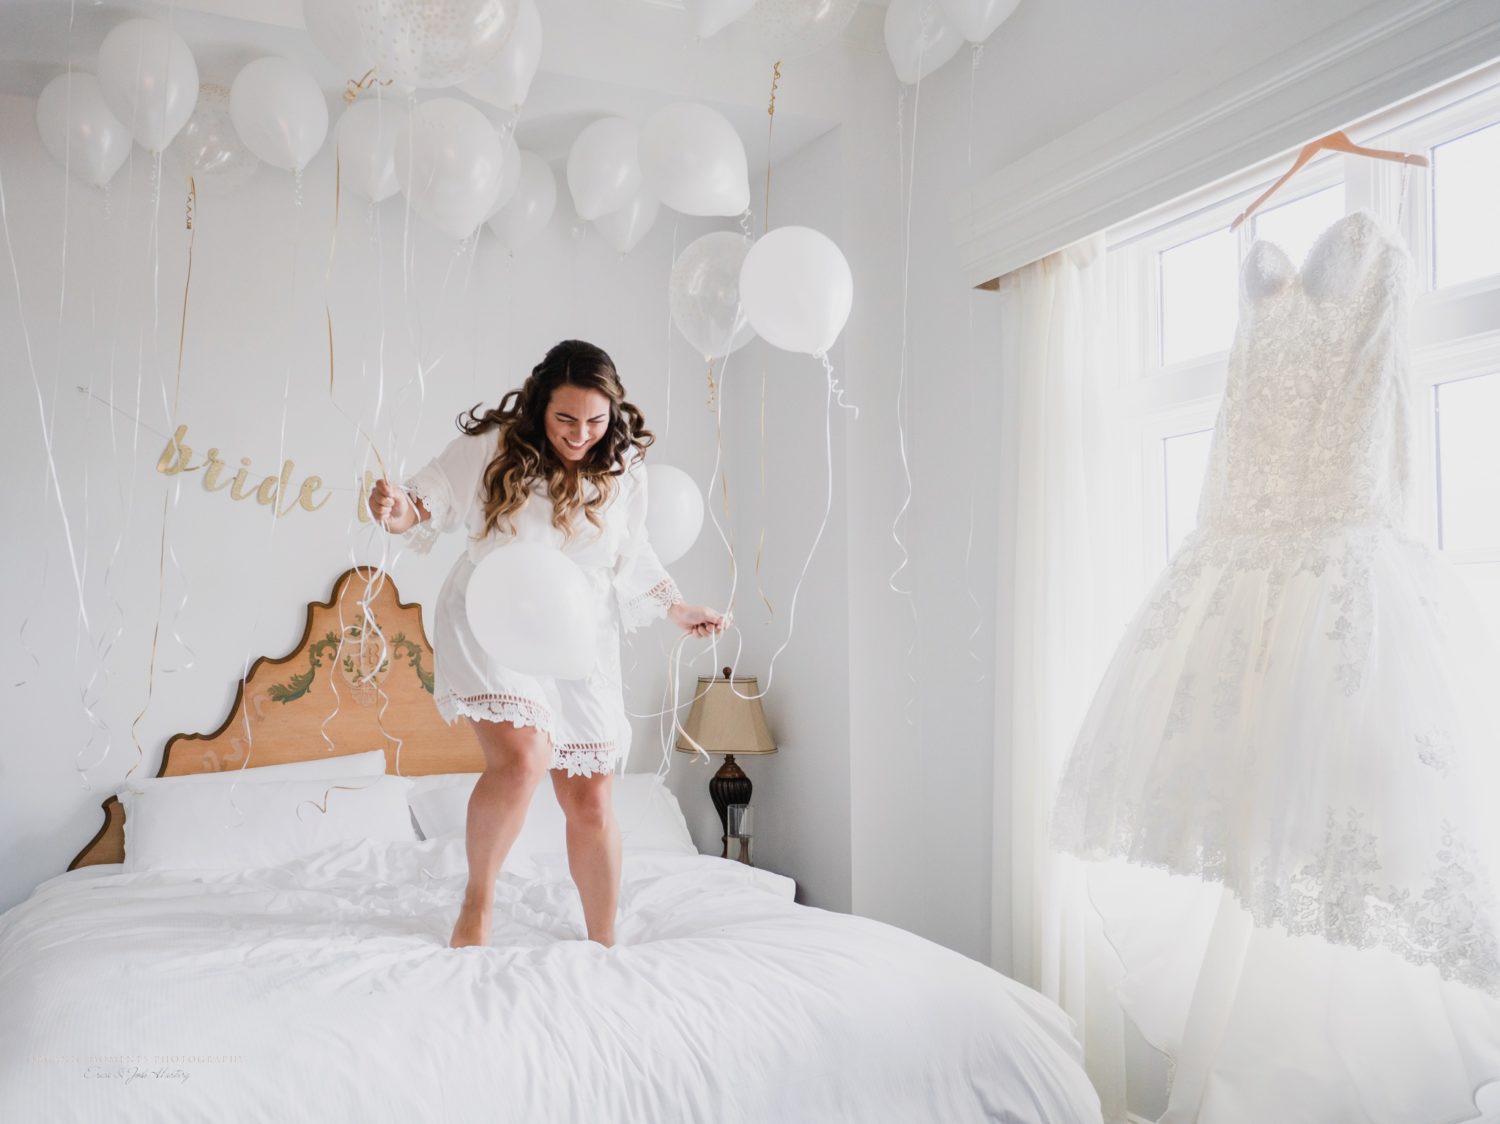 Miami-Biltmore-Hotel-wedding-dress-balloons-organic-moments-photography_0003